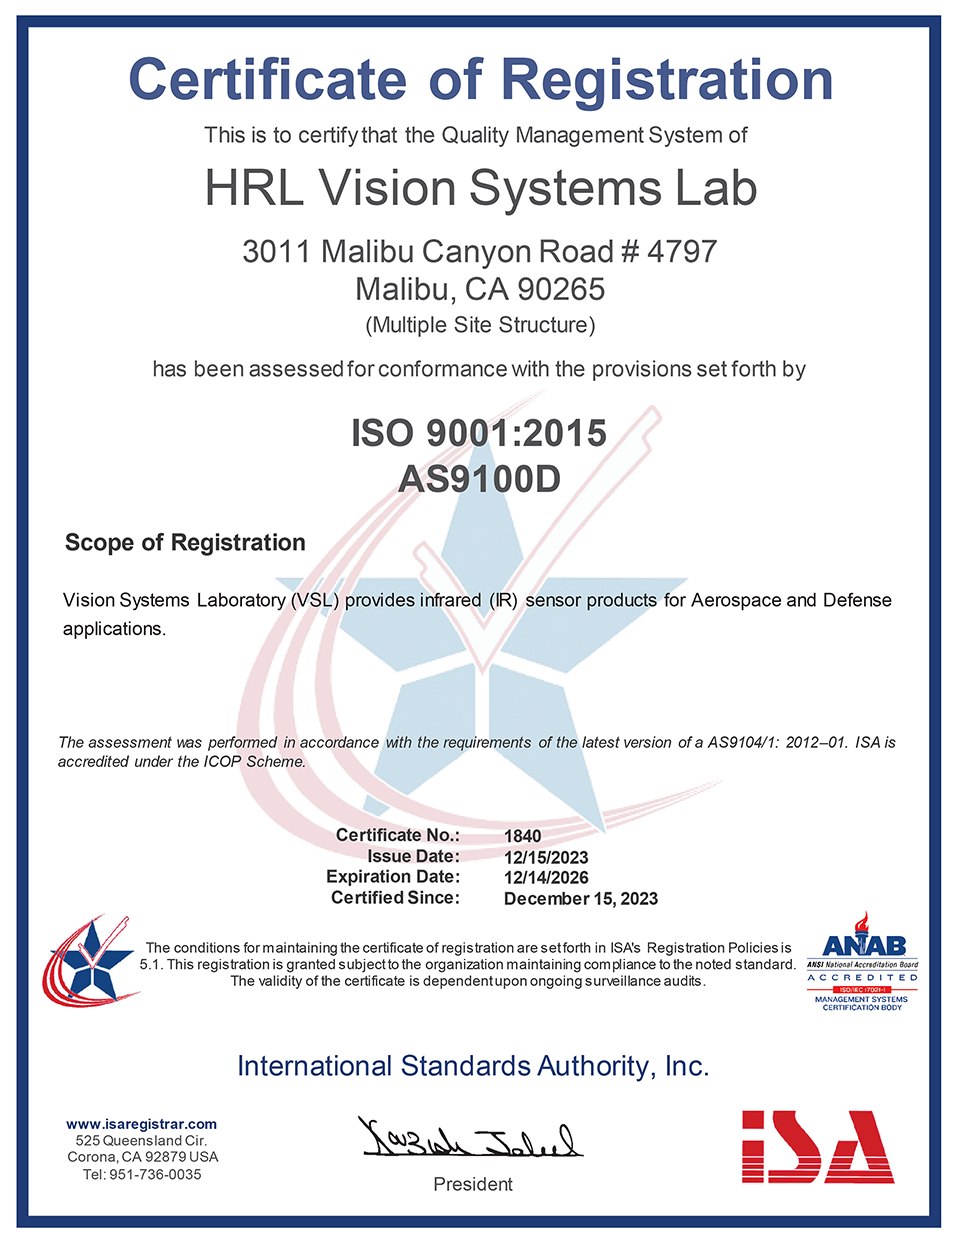 ISA AS9100D Certificate of Registration